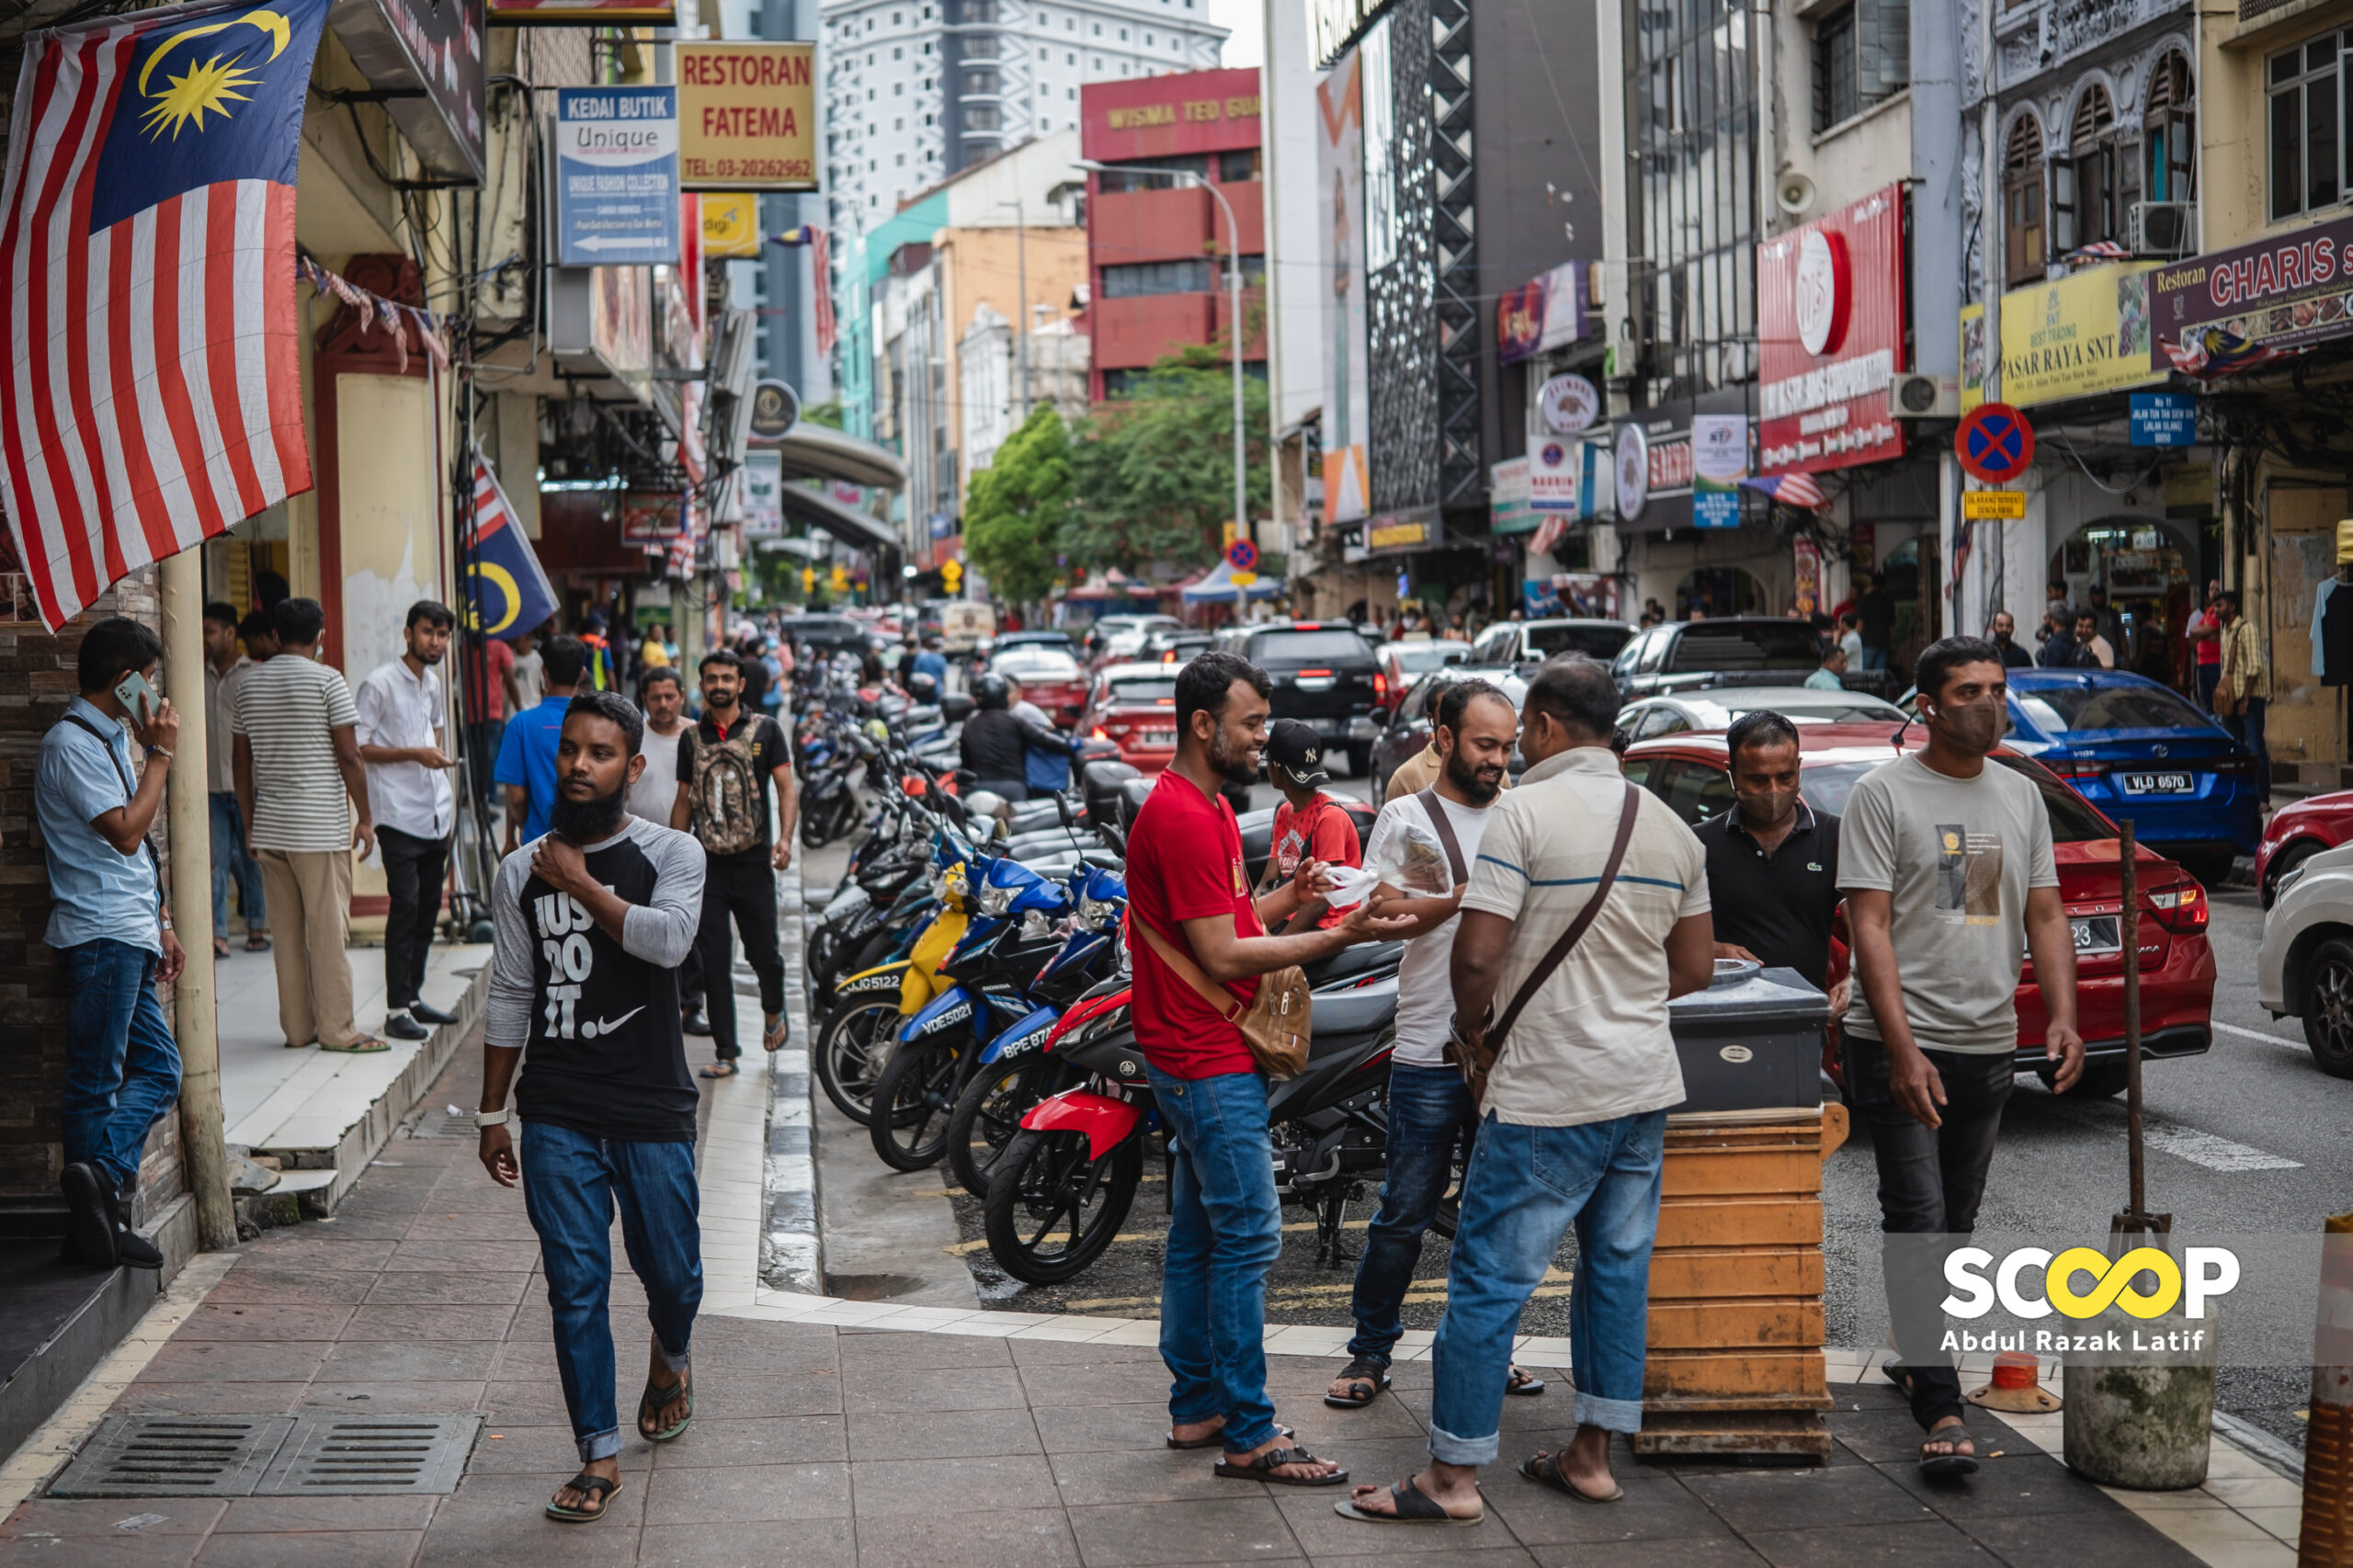 Local shops decry Jalan Silang migrant raid, cite decline in business